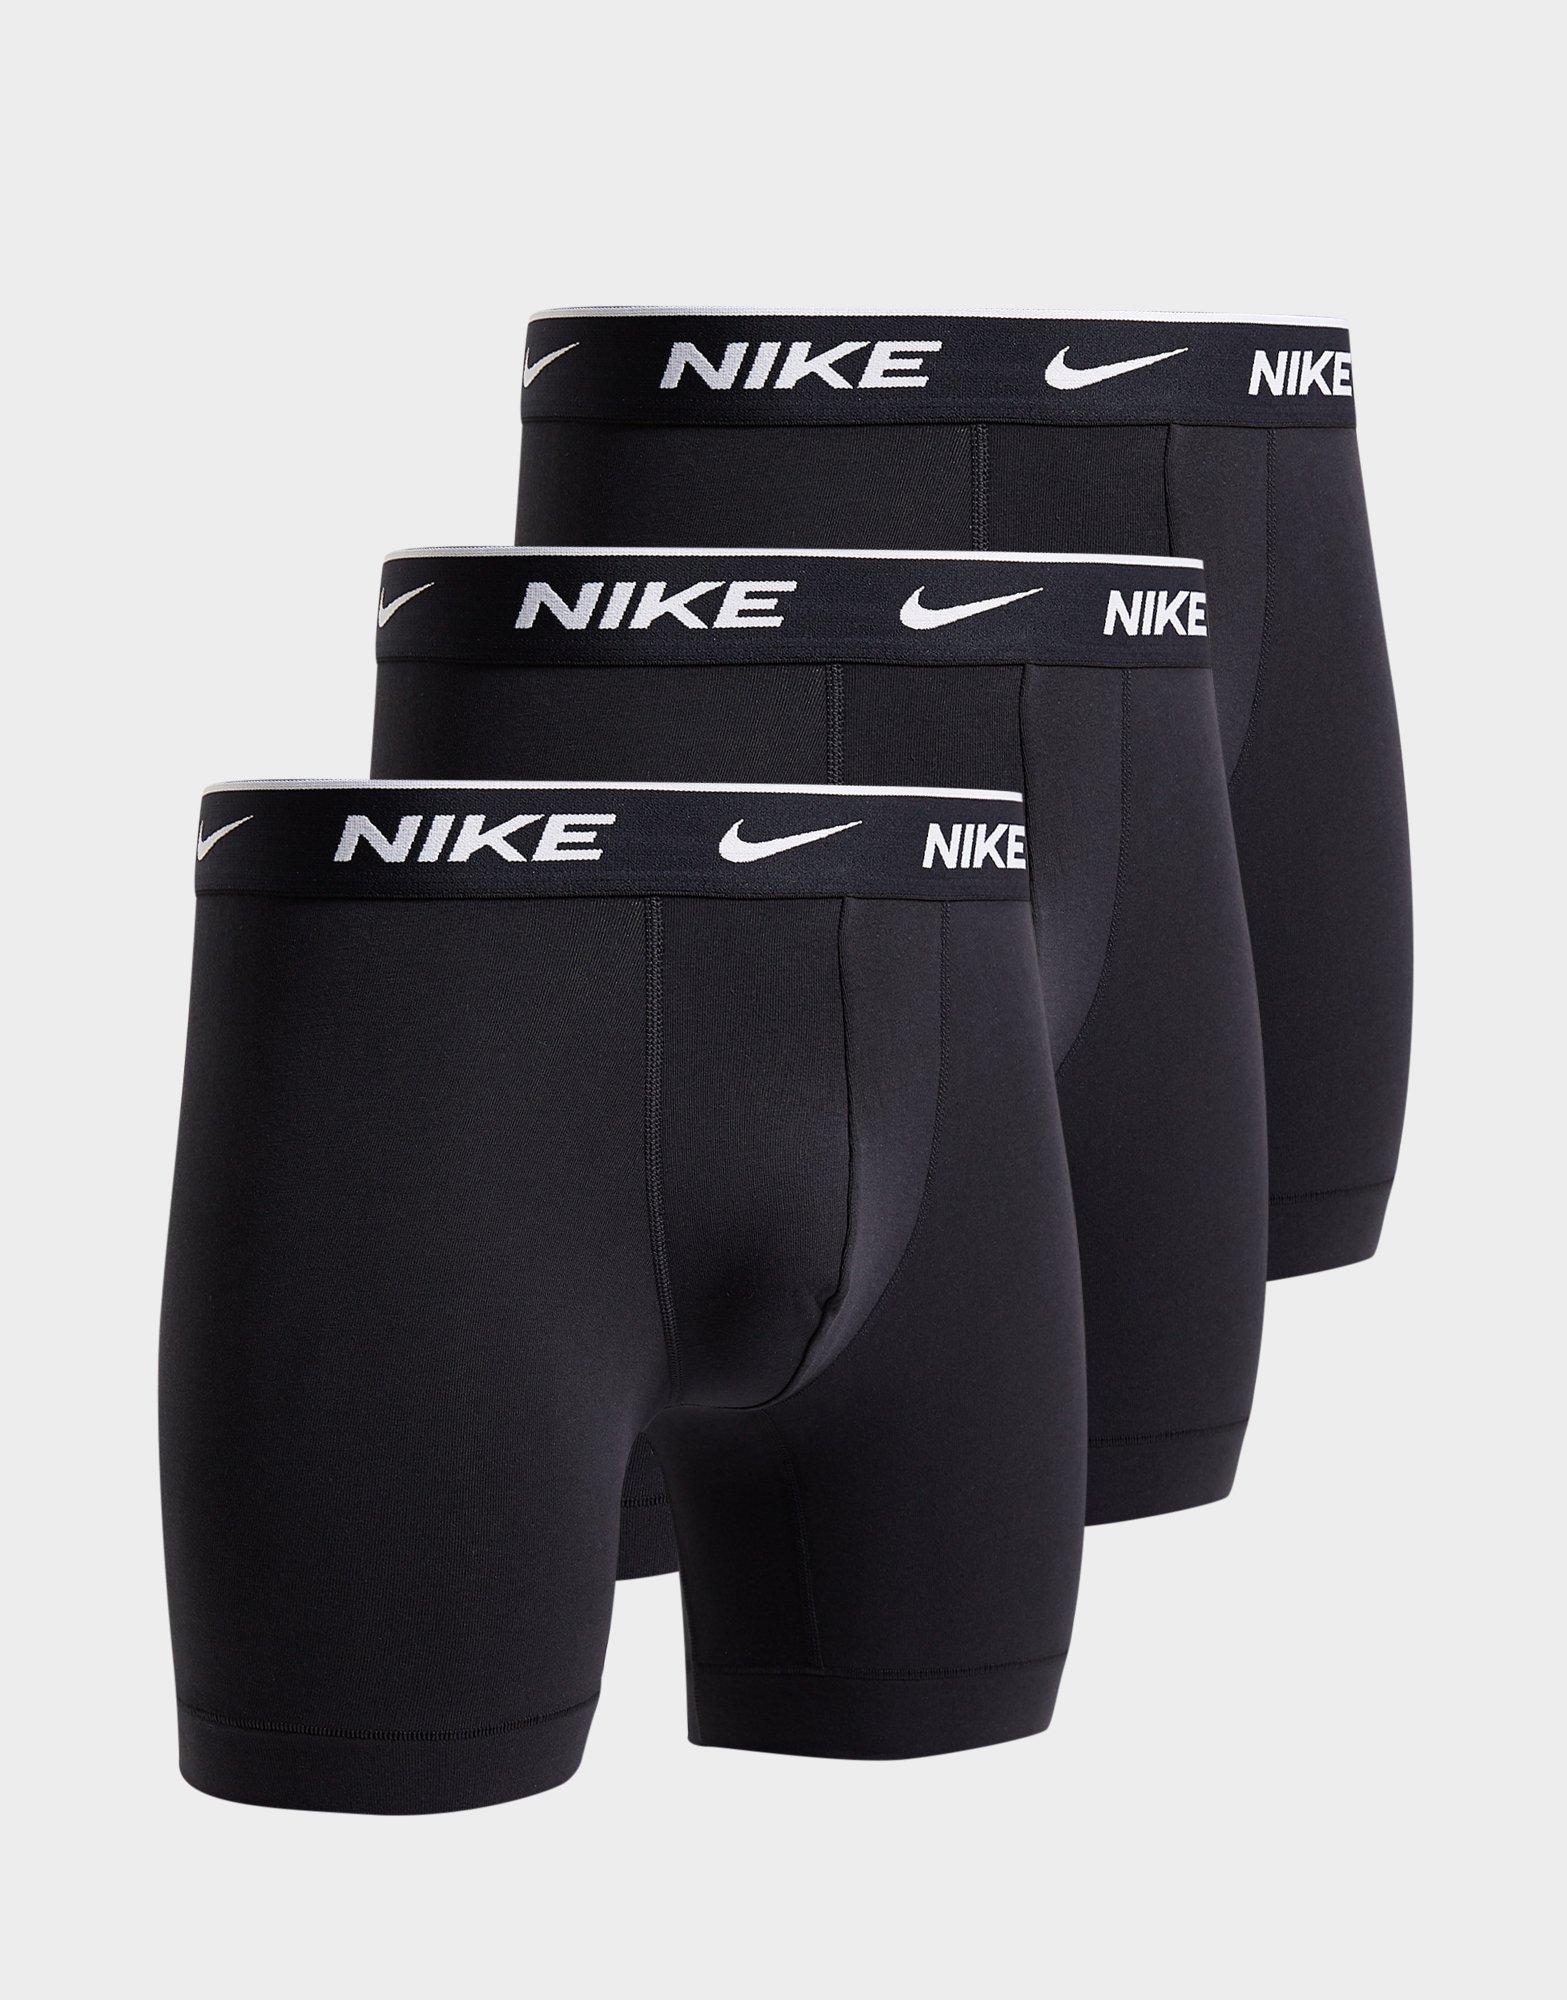 nike trunks underwear